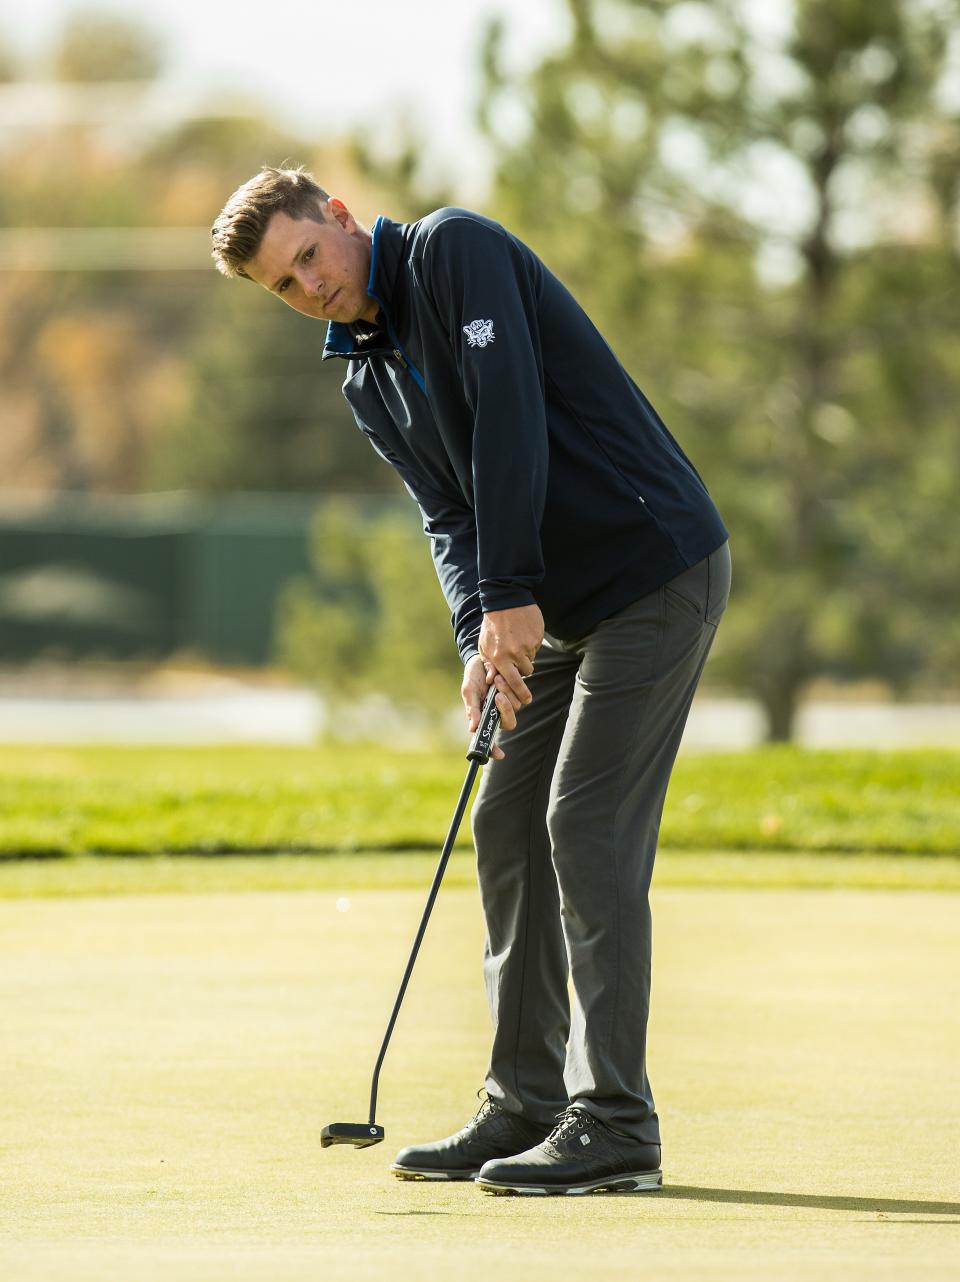 Former BYU golfer Rhett Rasmussen missed the cut by three shots in the 2021 Utah Championship, his first Korn Ferry Tour tournament.